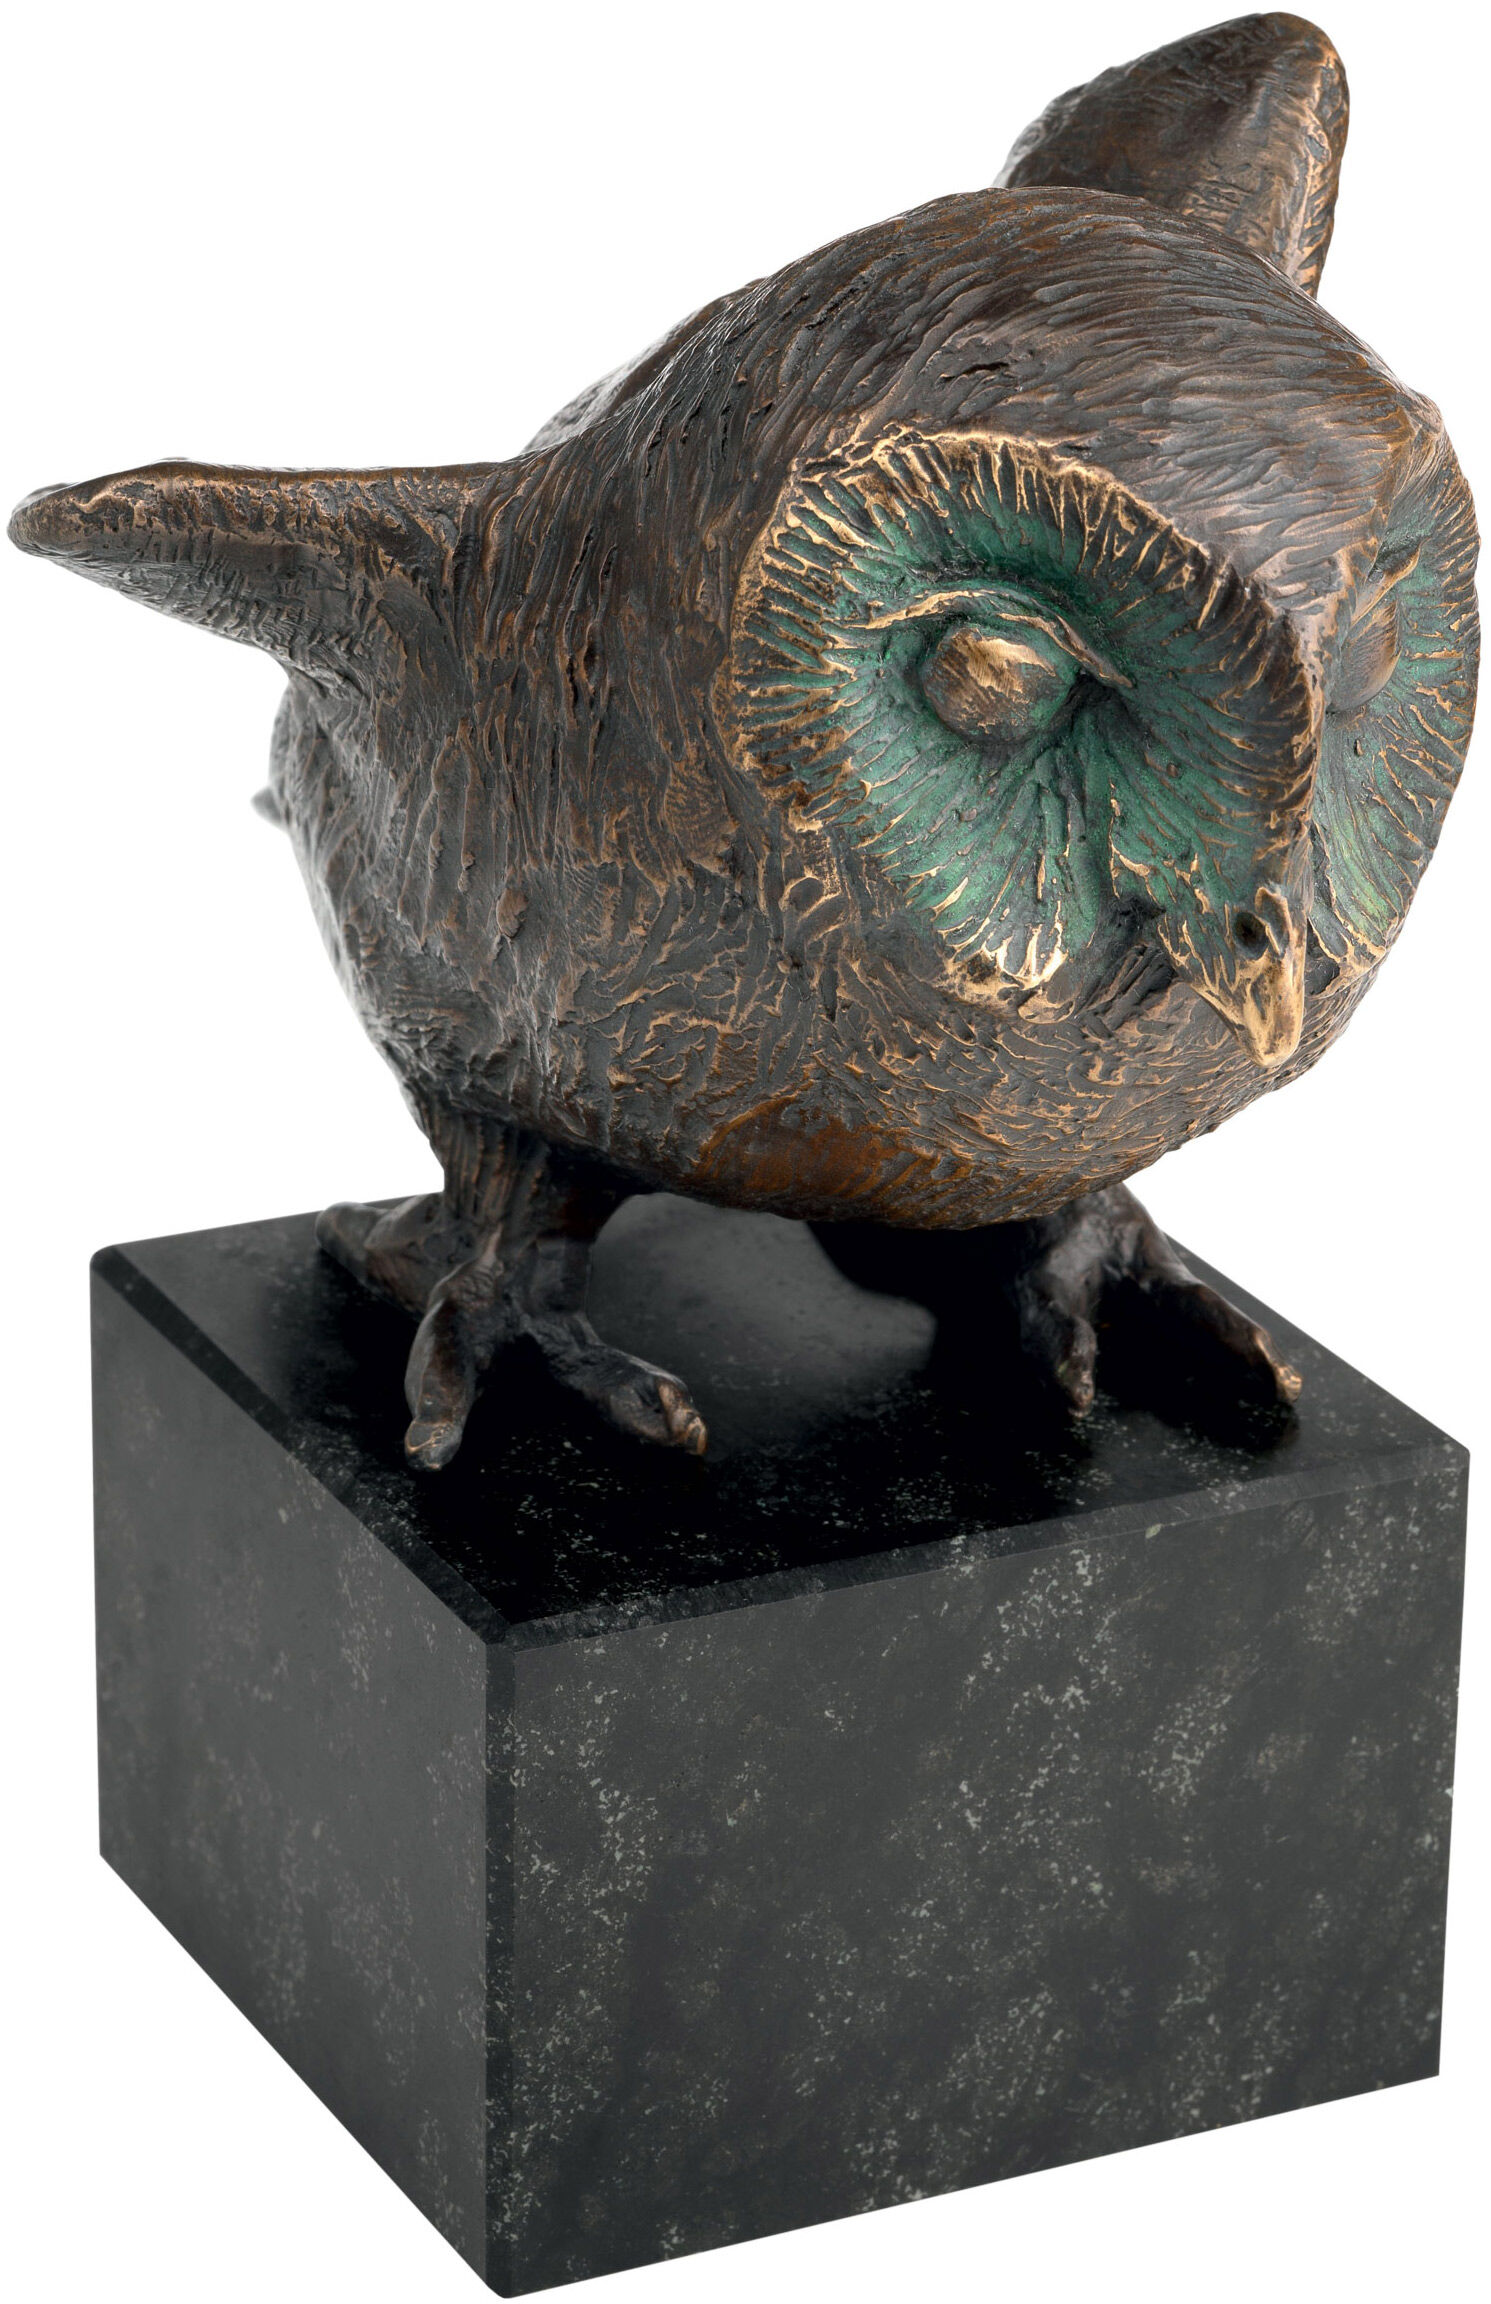 Uggleskulptur "The Guardian of the Nest", brons von Kurt Arentz